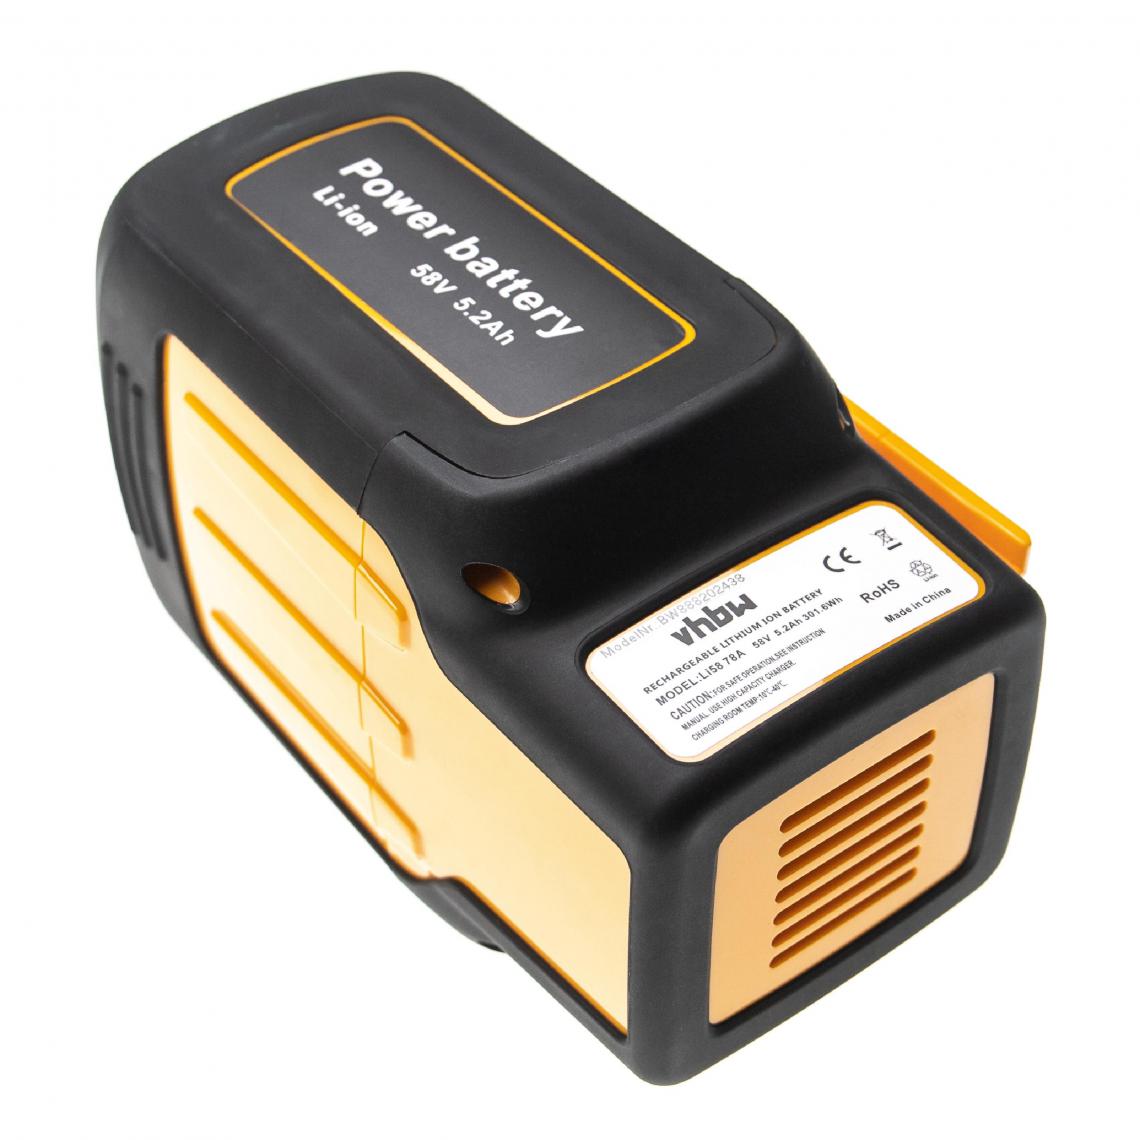 Vhbw - vhbw Batterie compatible avec Jonsered B750i, BP750i, CC16i, CS16i, HT24i, L1621i outil électrique (5200mAh Li-ion 58 V) - Clouterie